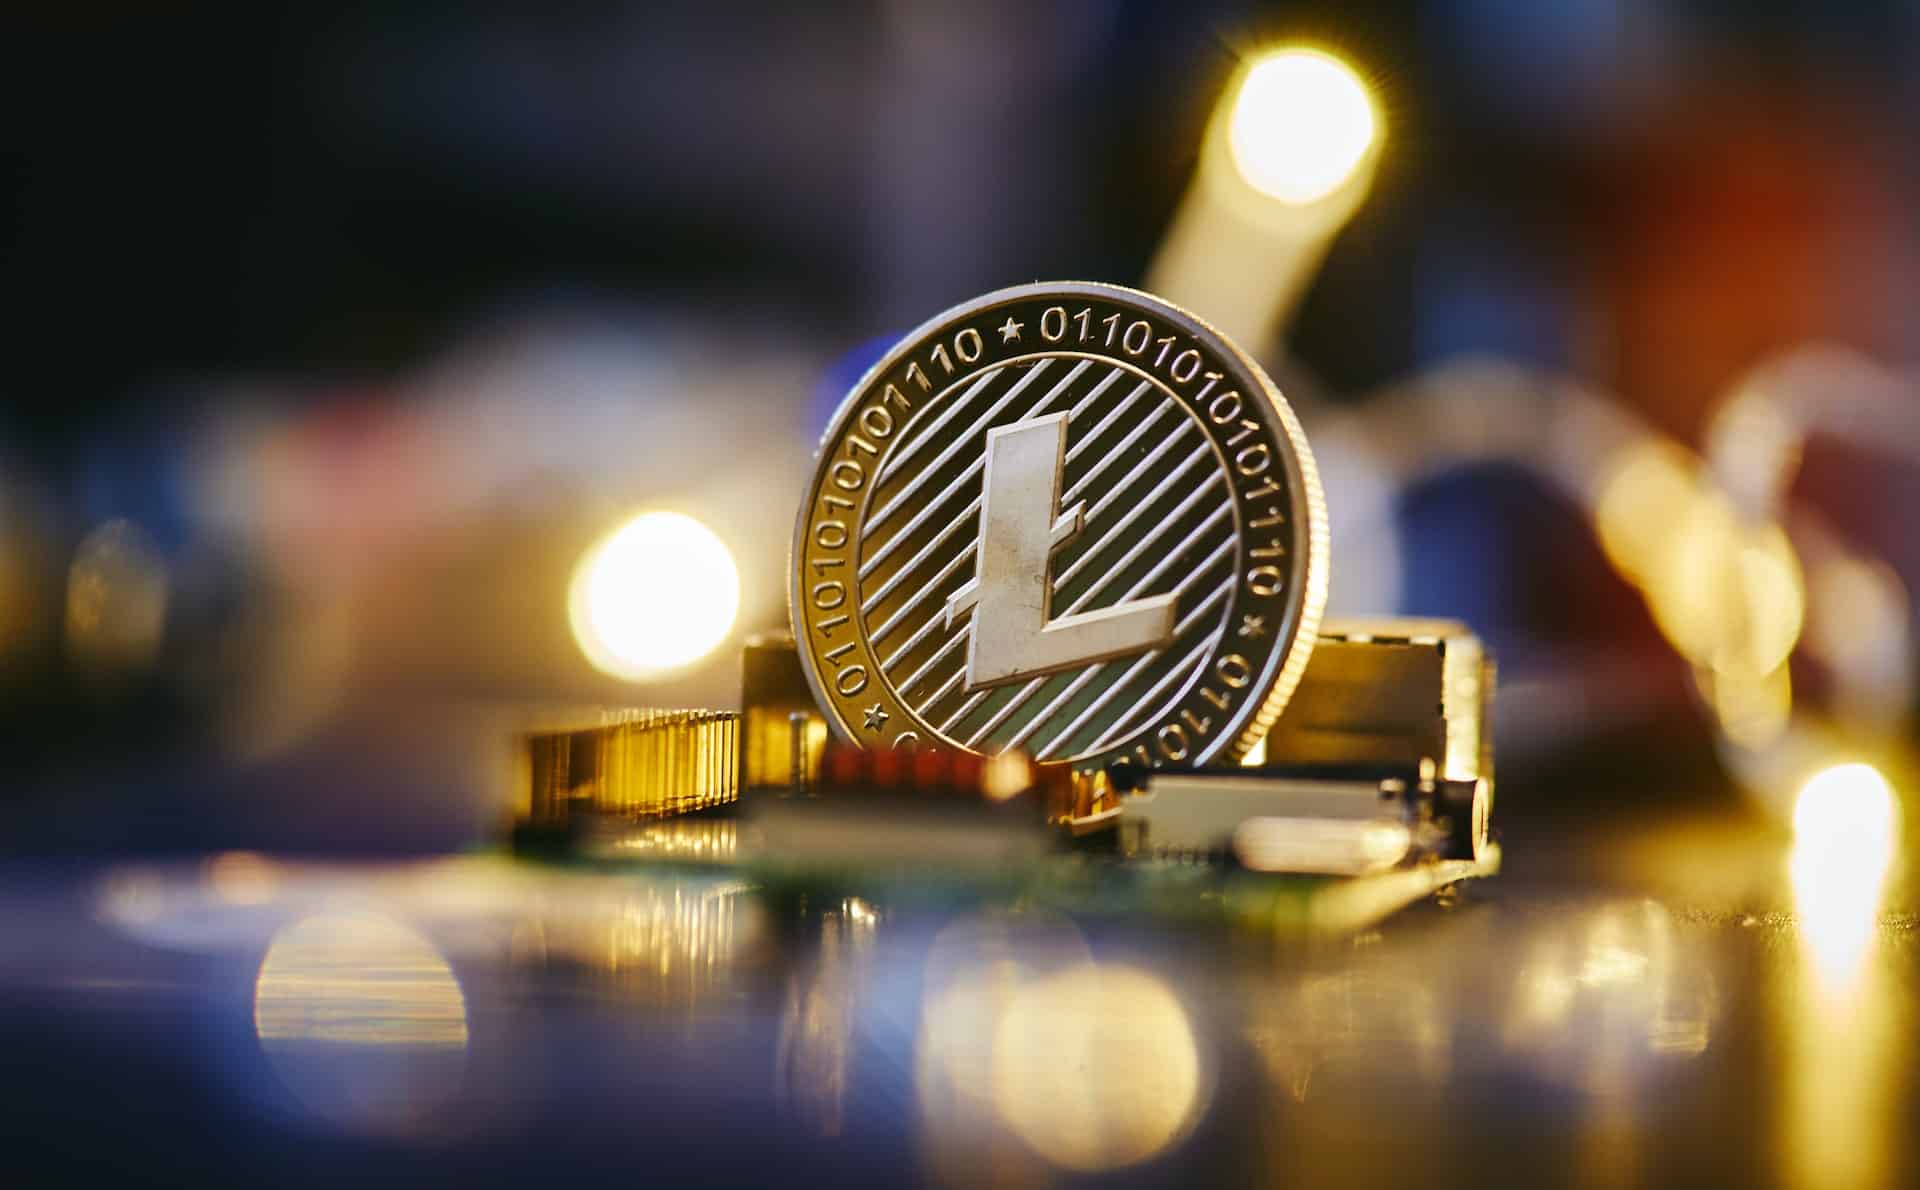 Litecoin-Kurs-Prognose-12-in-24h-besser-als-Bitcoin-Ethereum-LTC-pumpt-doch-was-steckt-dahinter-